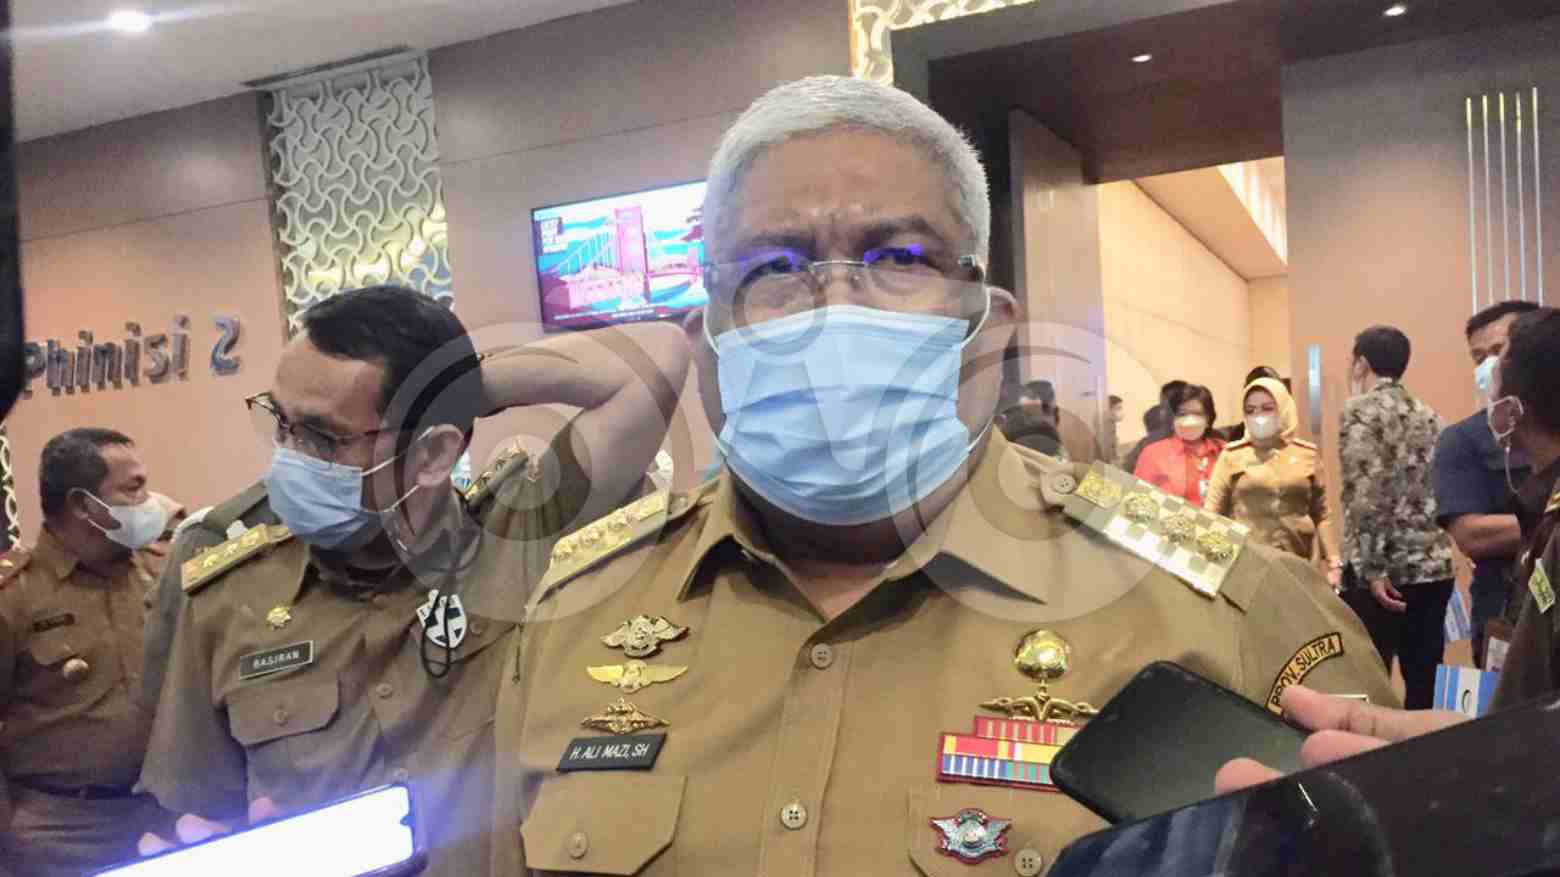 Kadis Kominfo Dilapor Polisi, Gubernur Serahkan ke Aparat Hukum